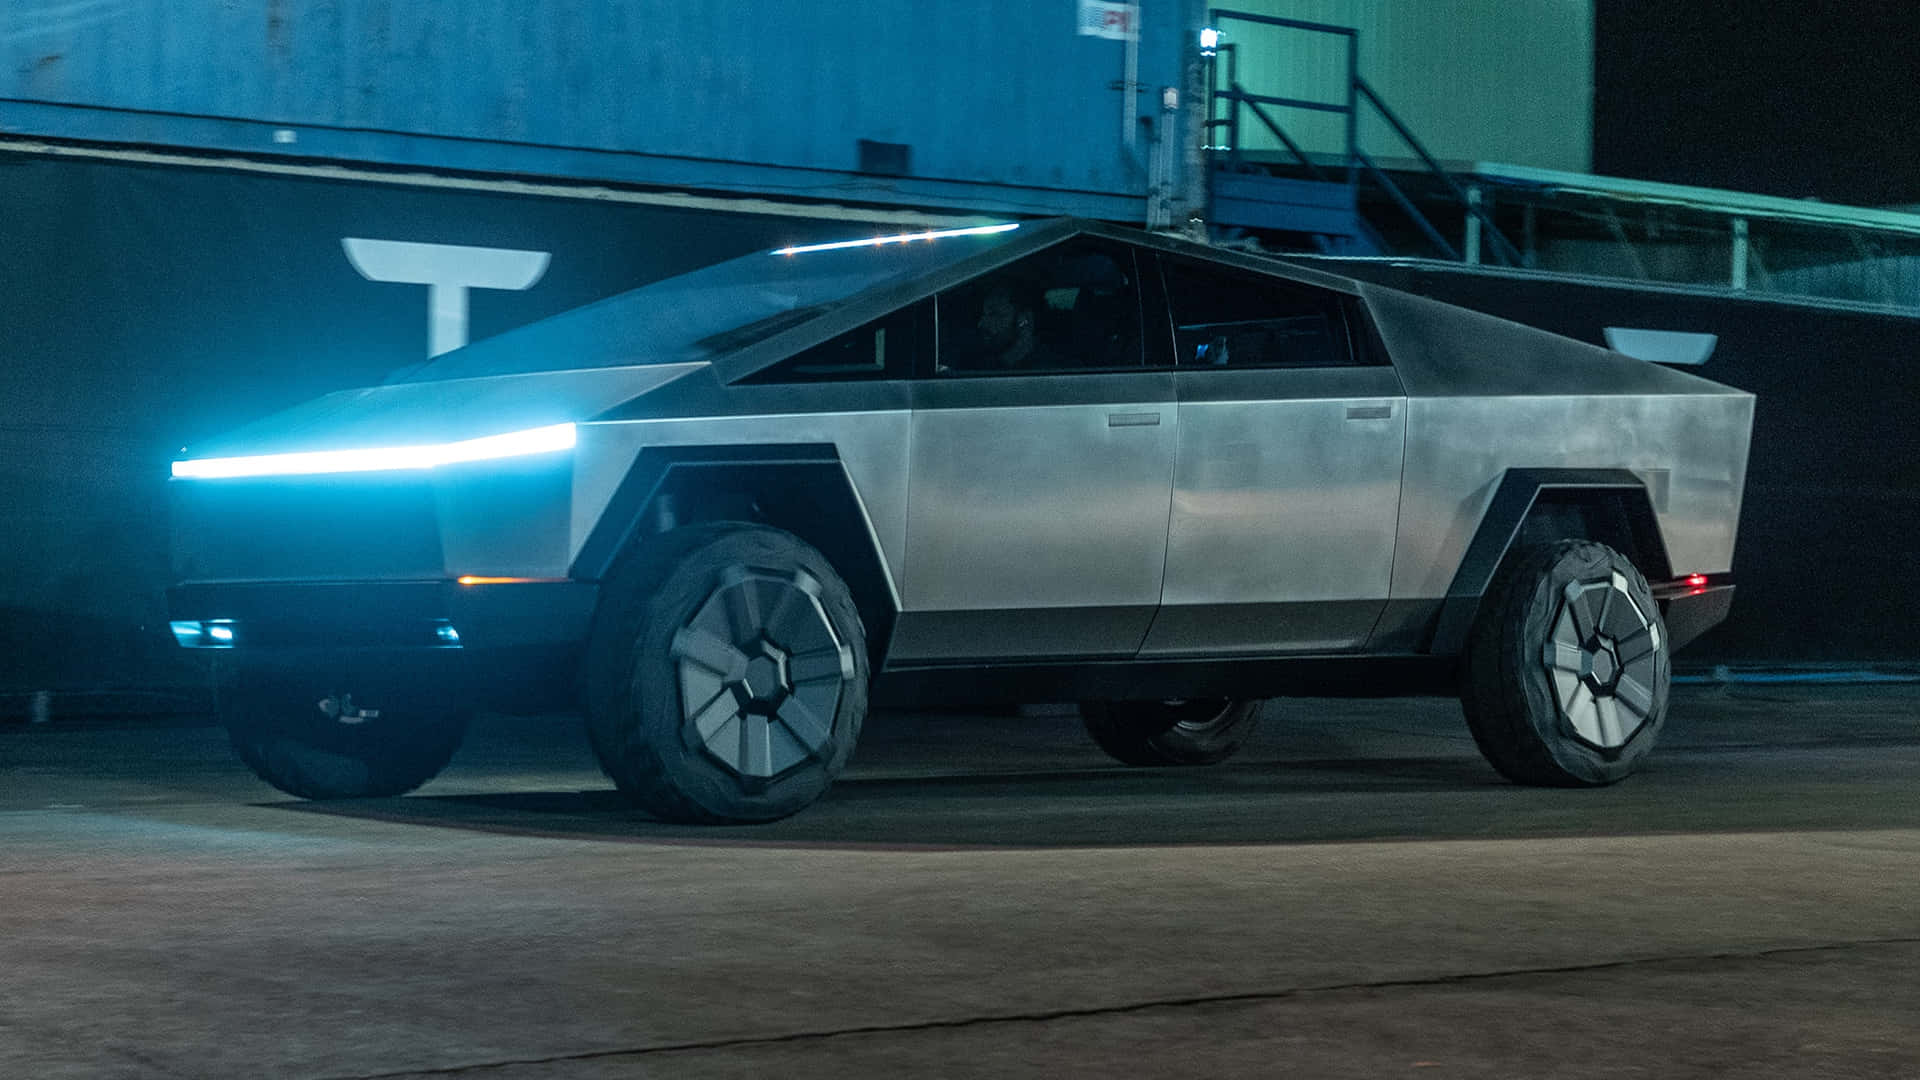 Tesla's futuristic Cybertruck ready to hit the roads.